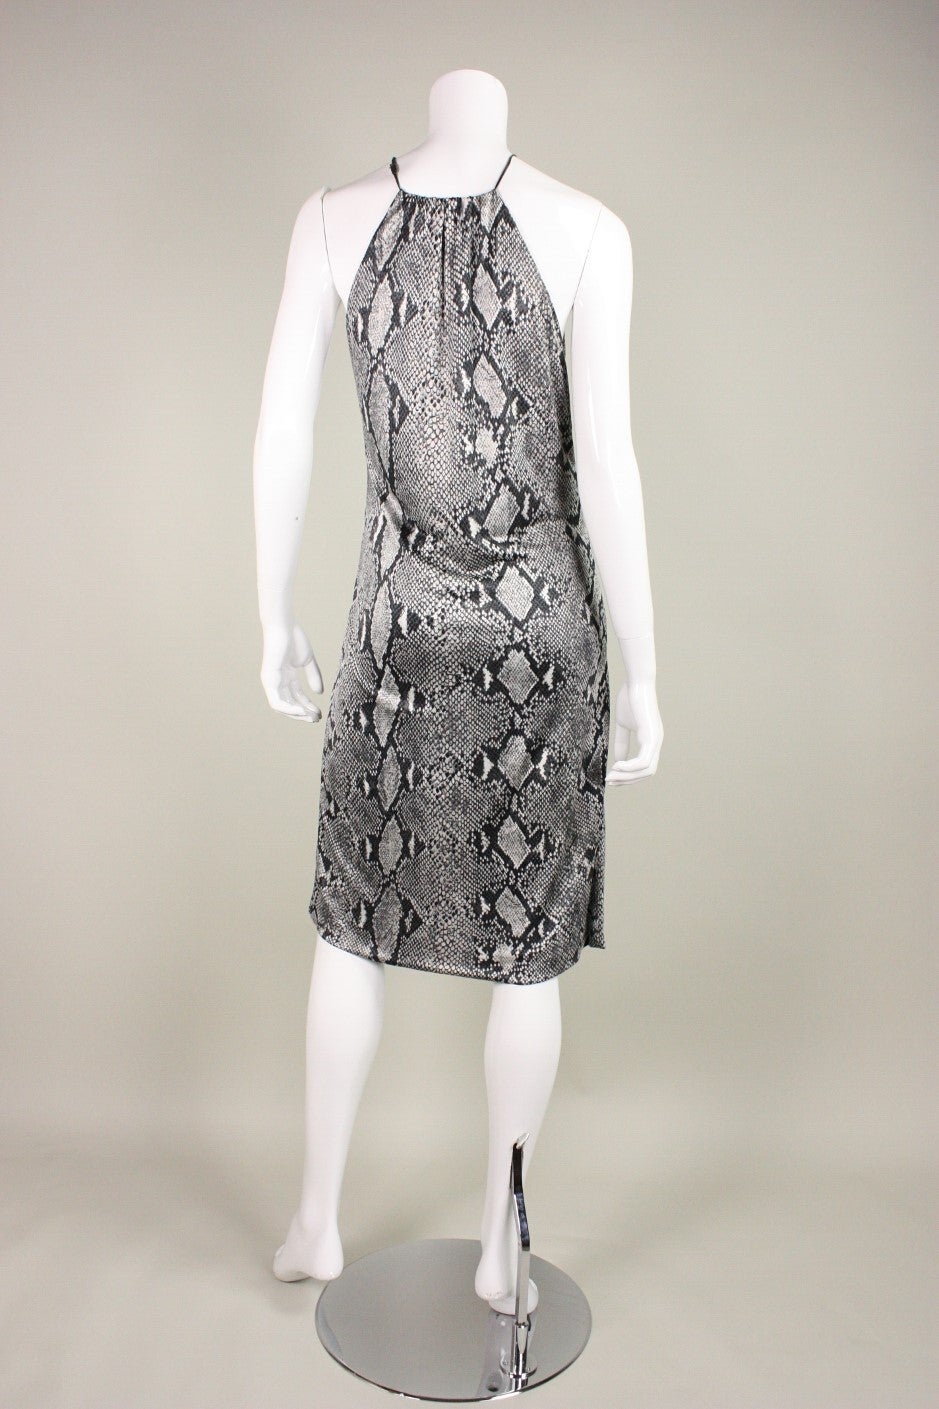 Tom Ford for Gucci Snakeskin Print Dress 2